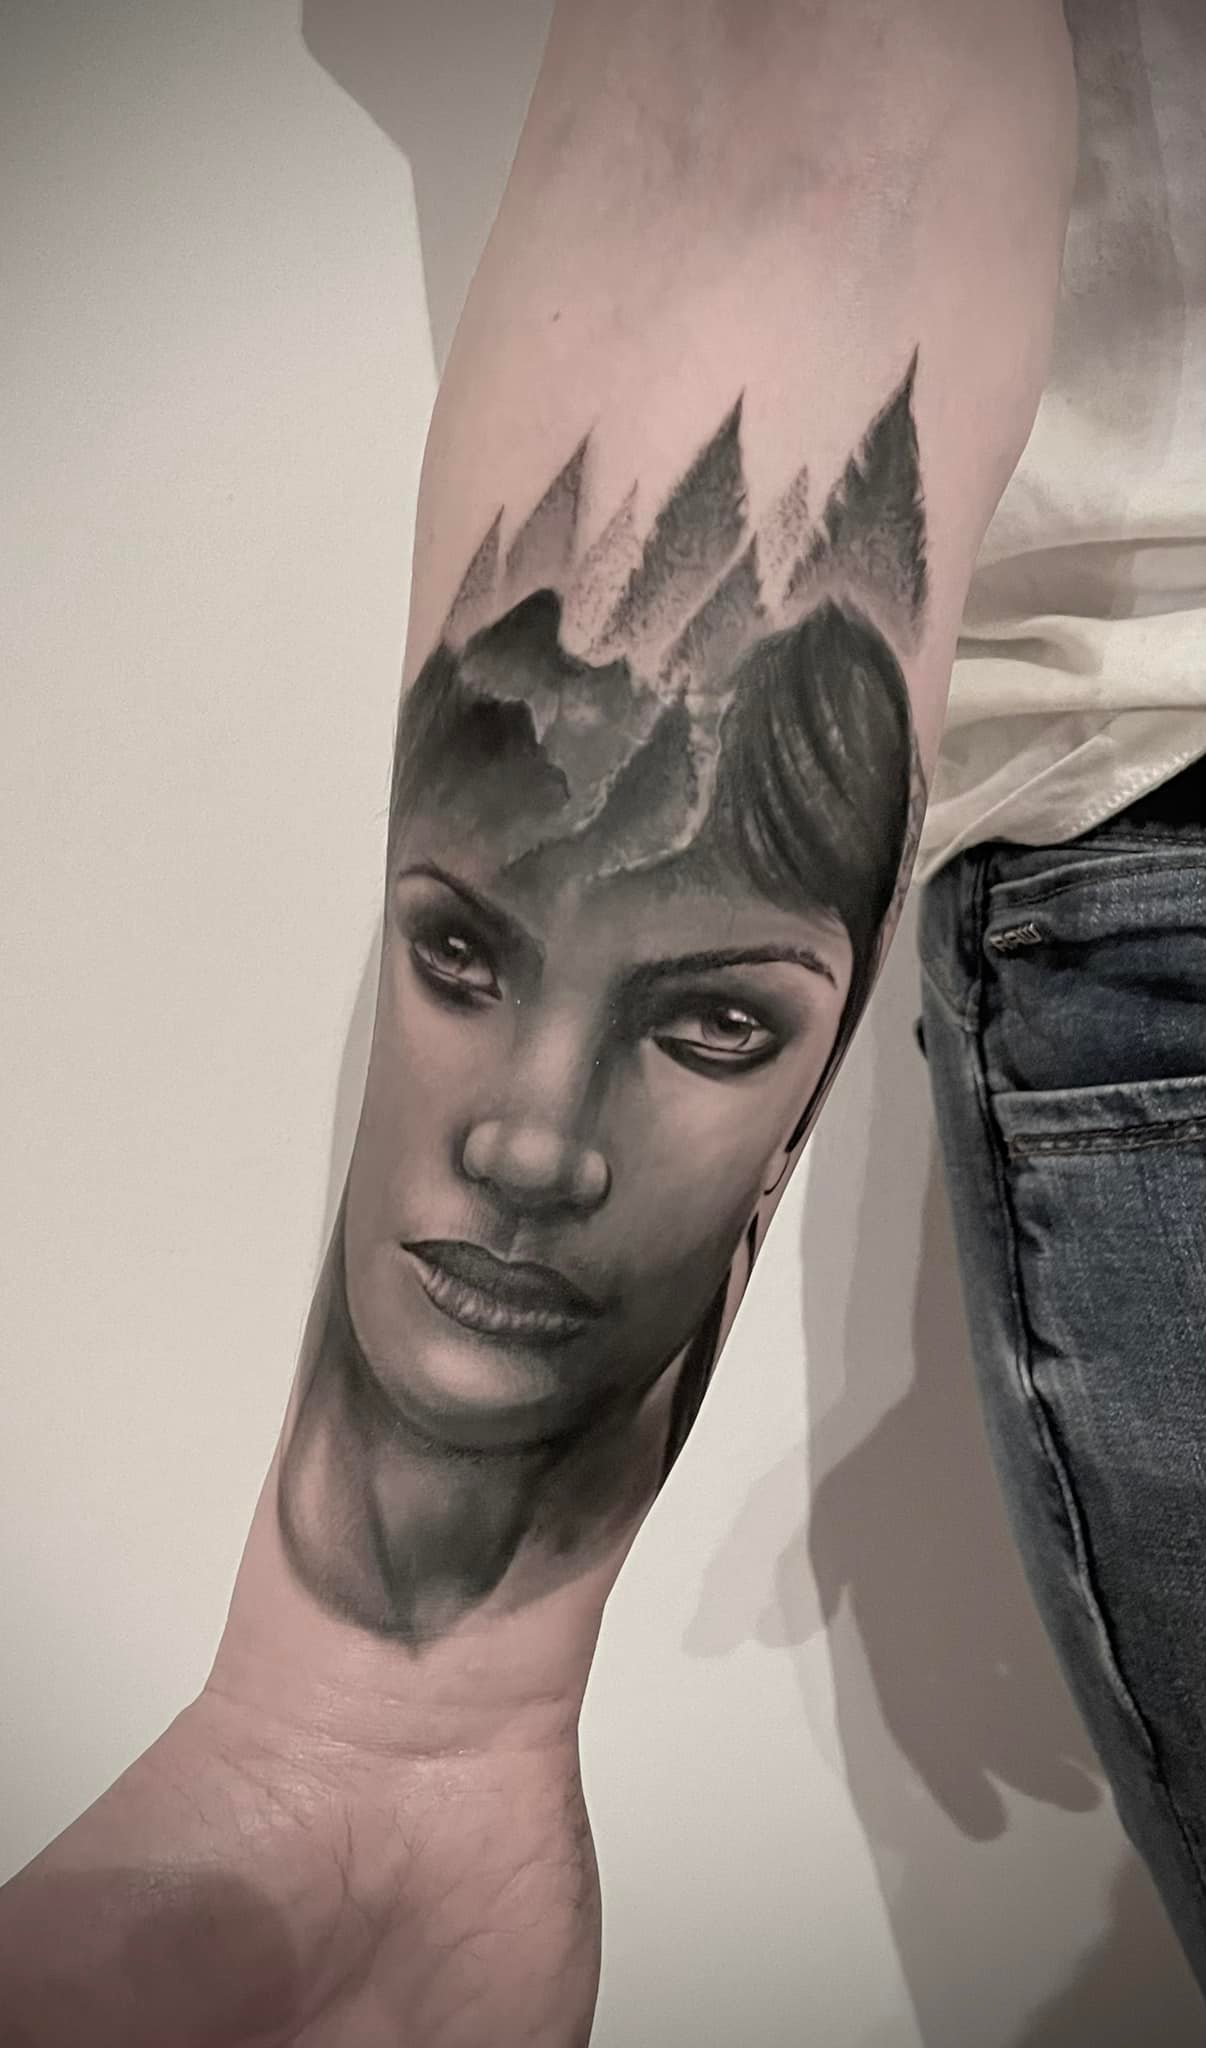 Nikos Papaspiros - Black'n'Grey Realistic Tattoos by Erika und Kurt Tattoos in Dresden